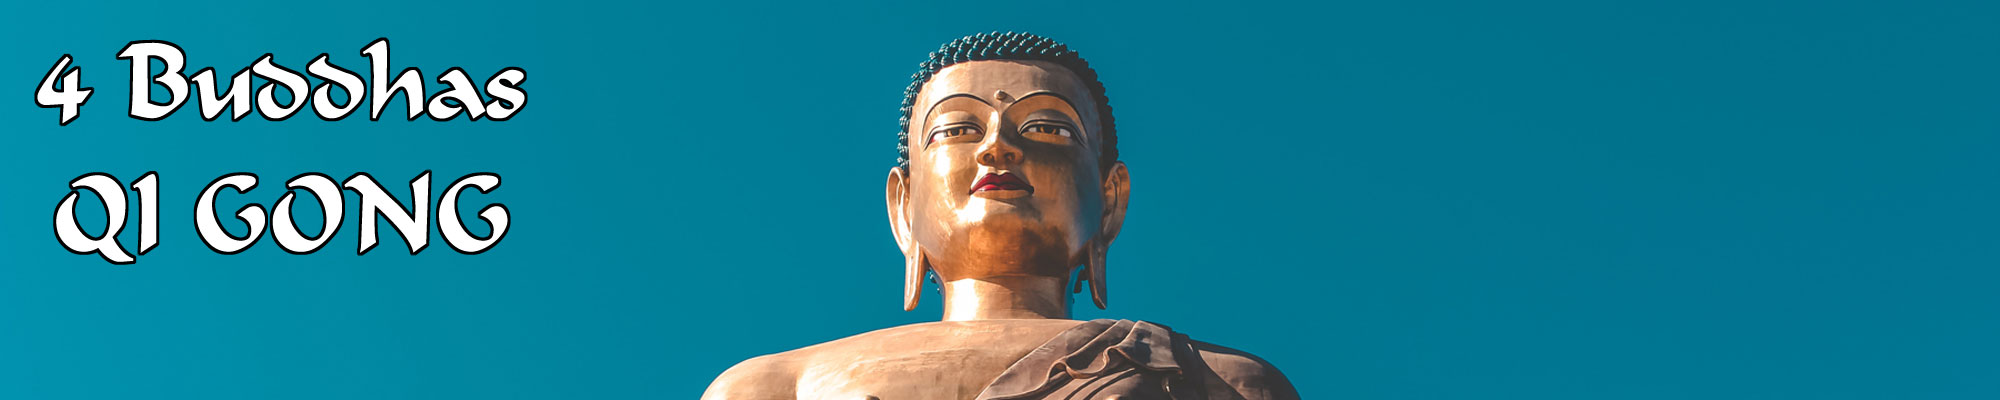 4 Buddhas QiGong - QI GONG meditation series - Tranquil Retreats